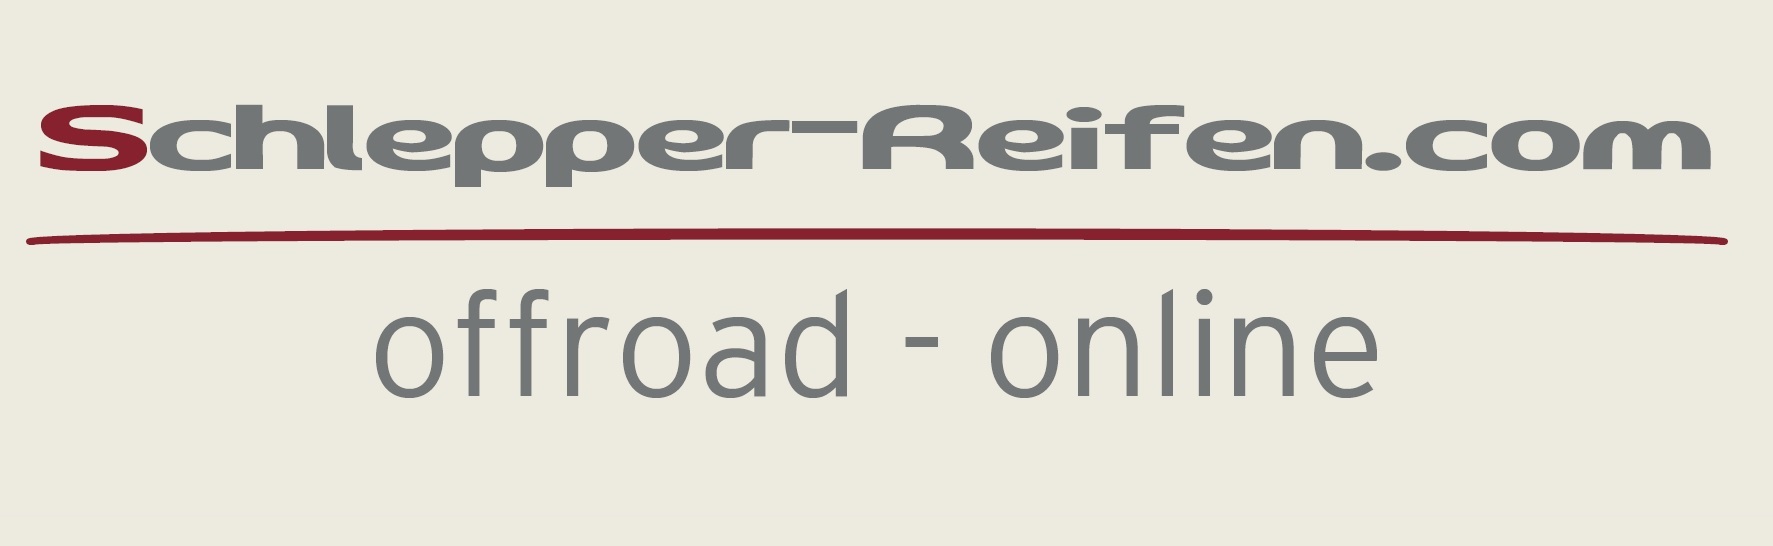 Schlepper-Reifen.com